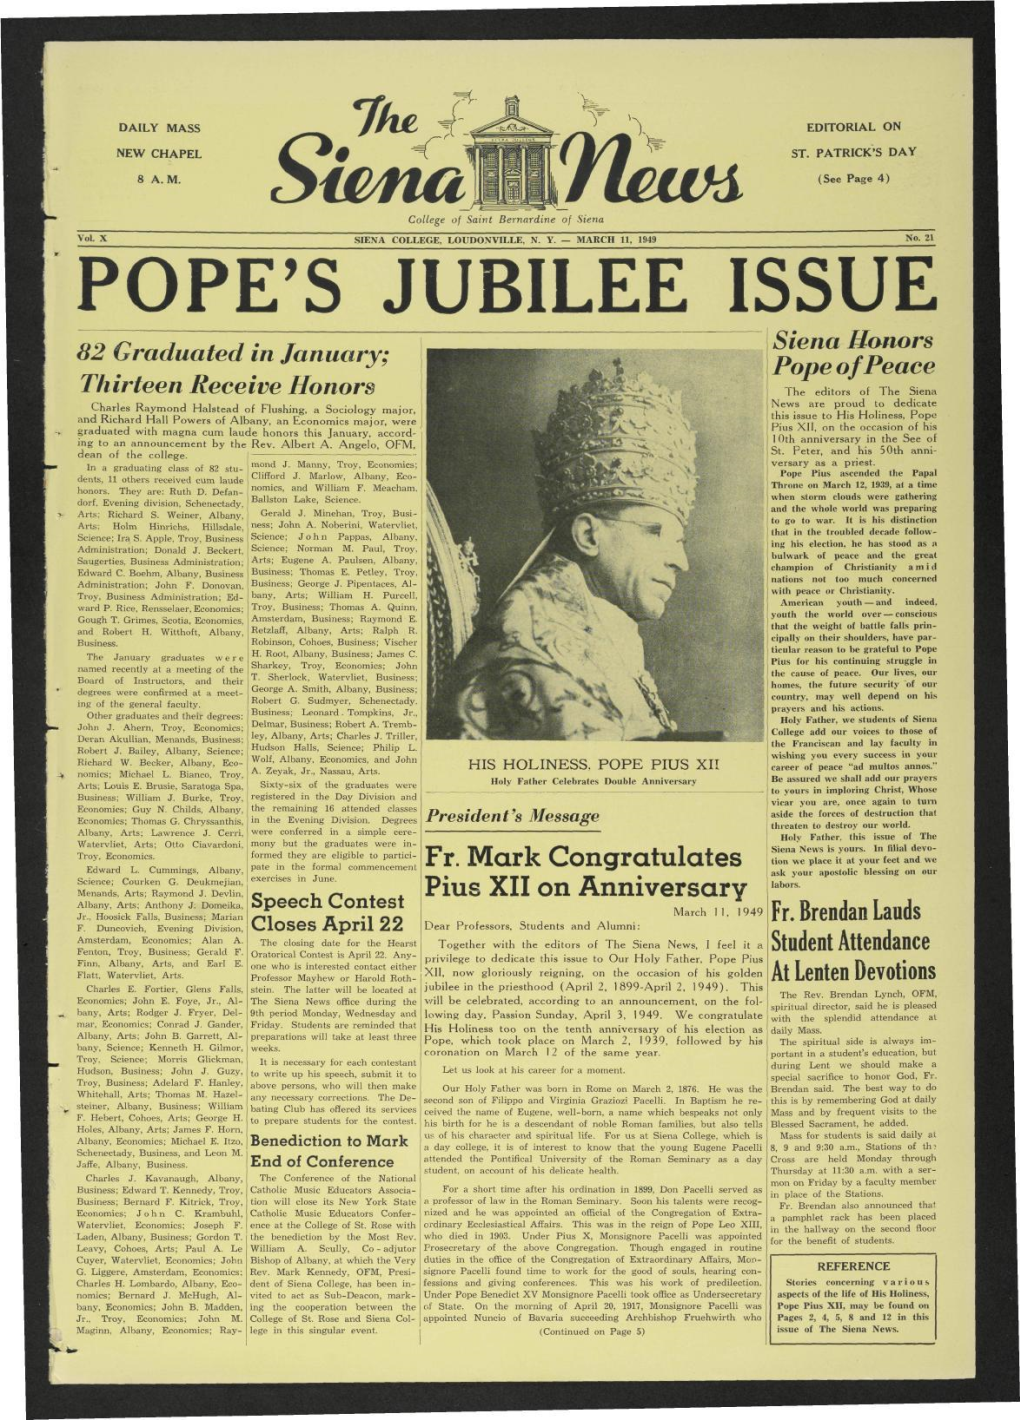 Fr. Mark Congratulates Pius XII on Anniversary